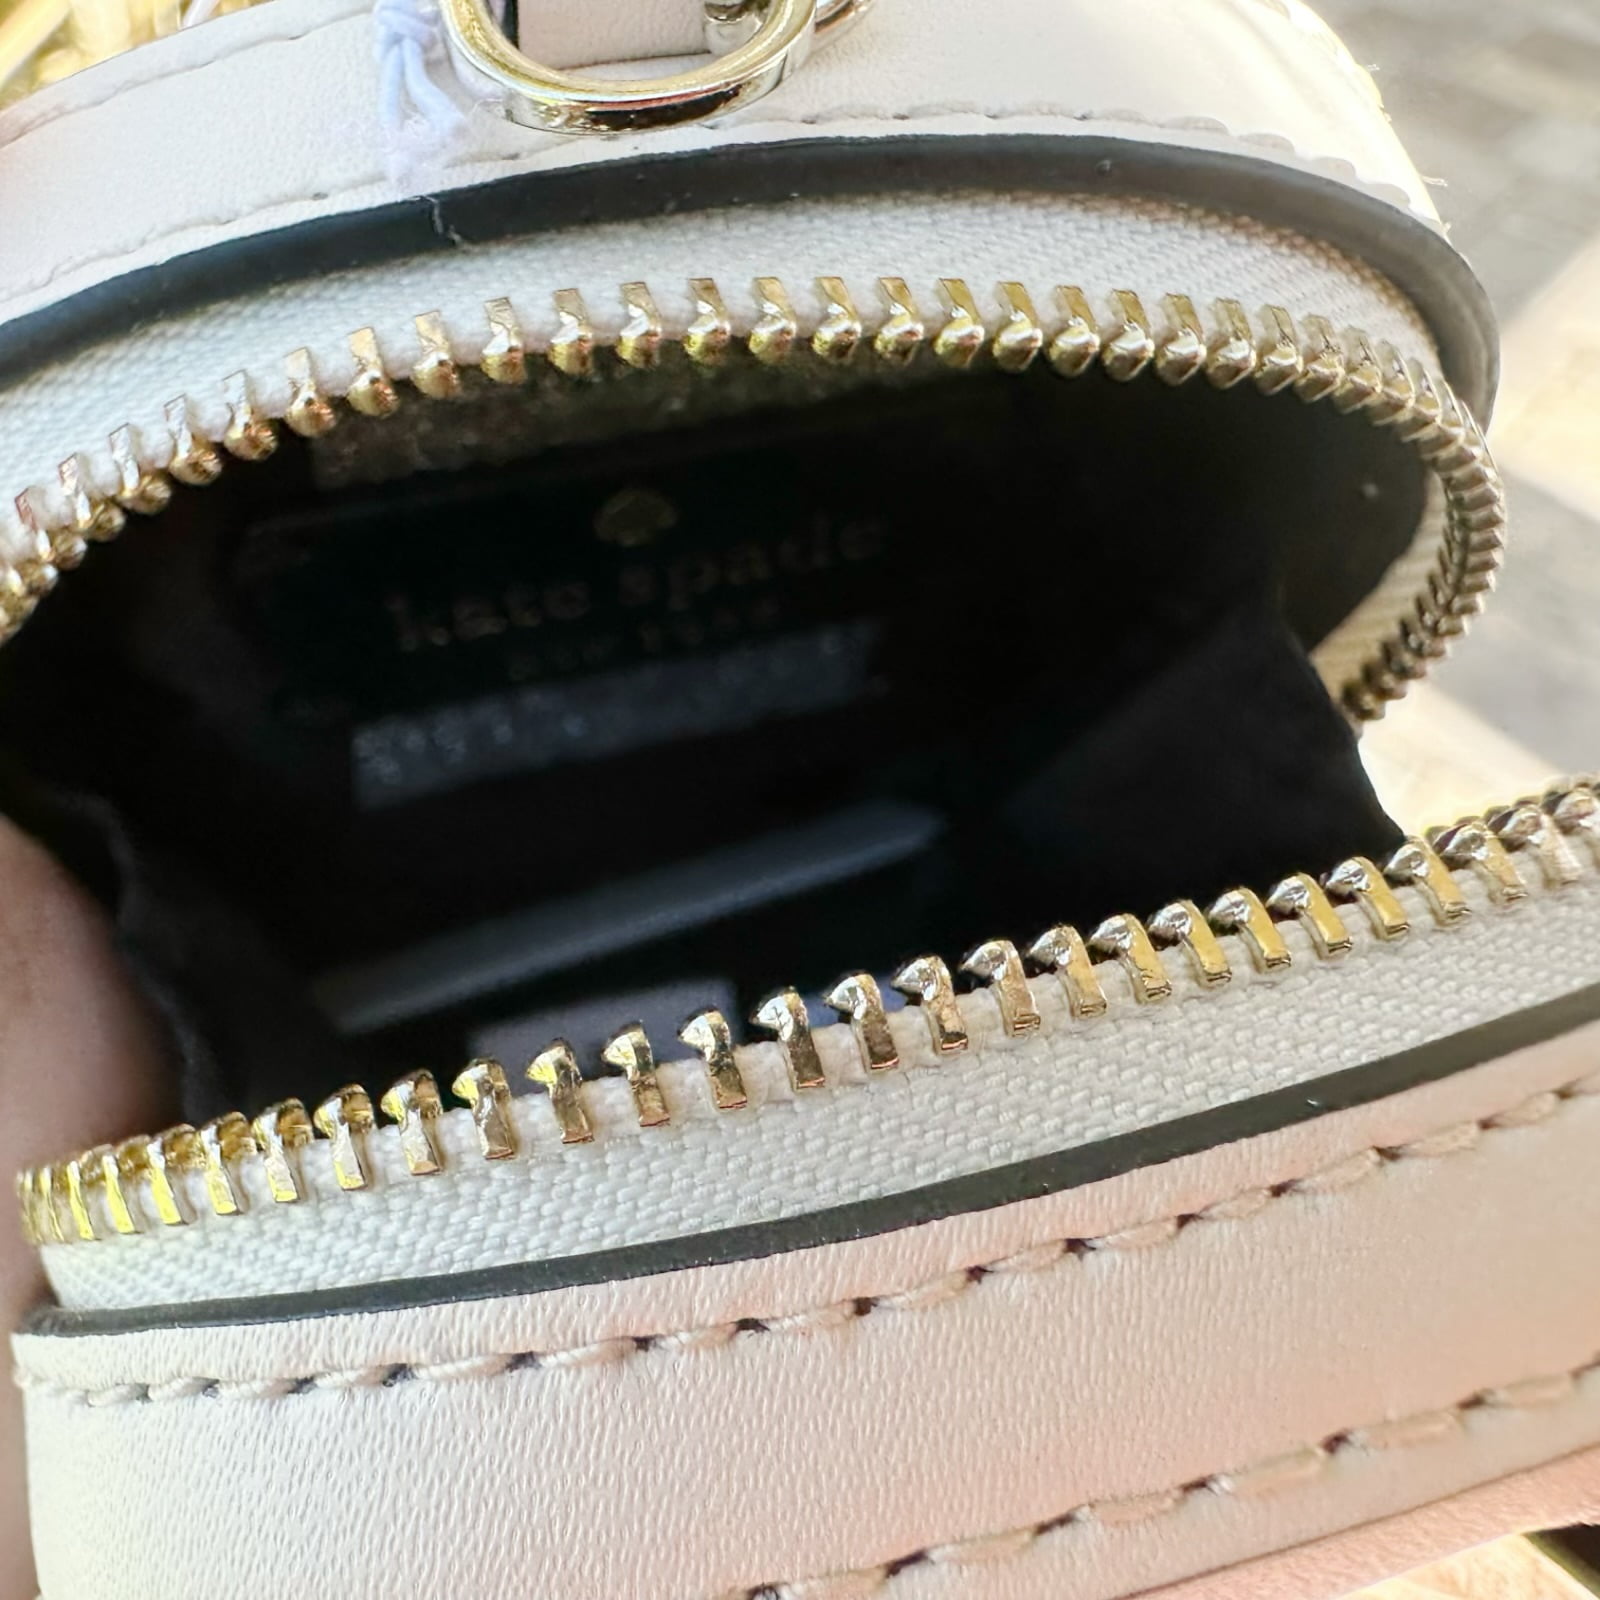 Kate spade claude dog smooth leather coin purse bag charm keychain